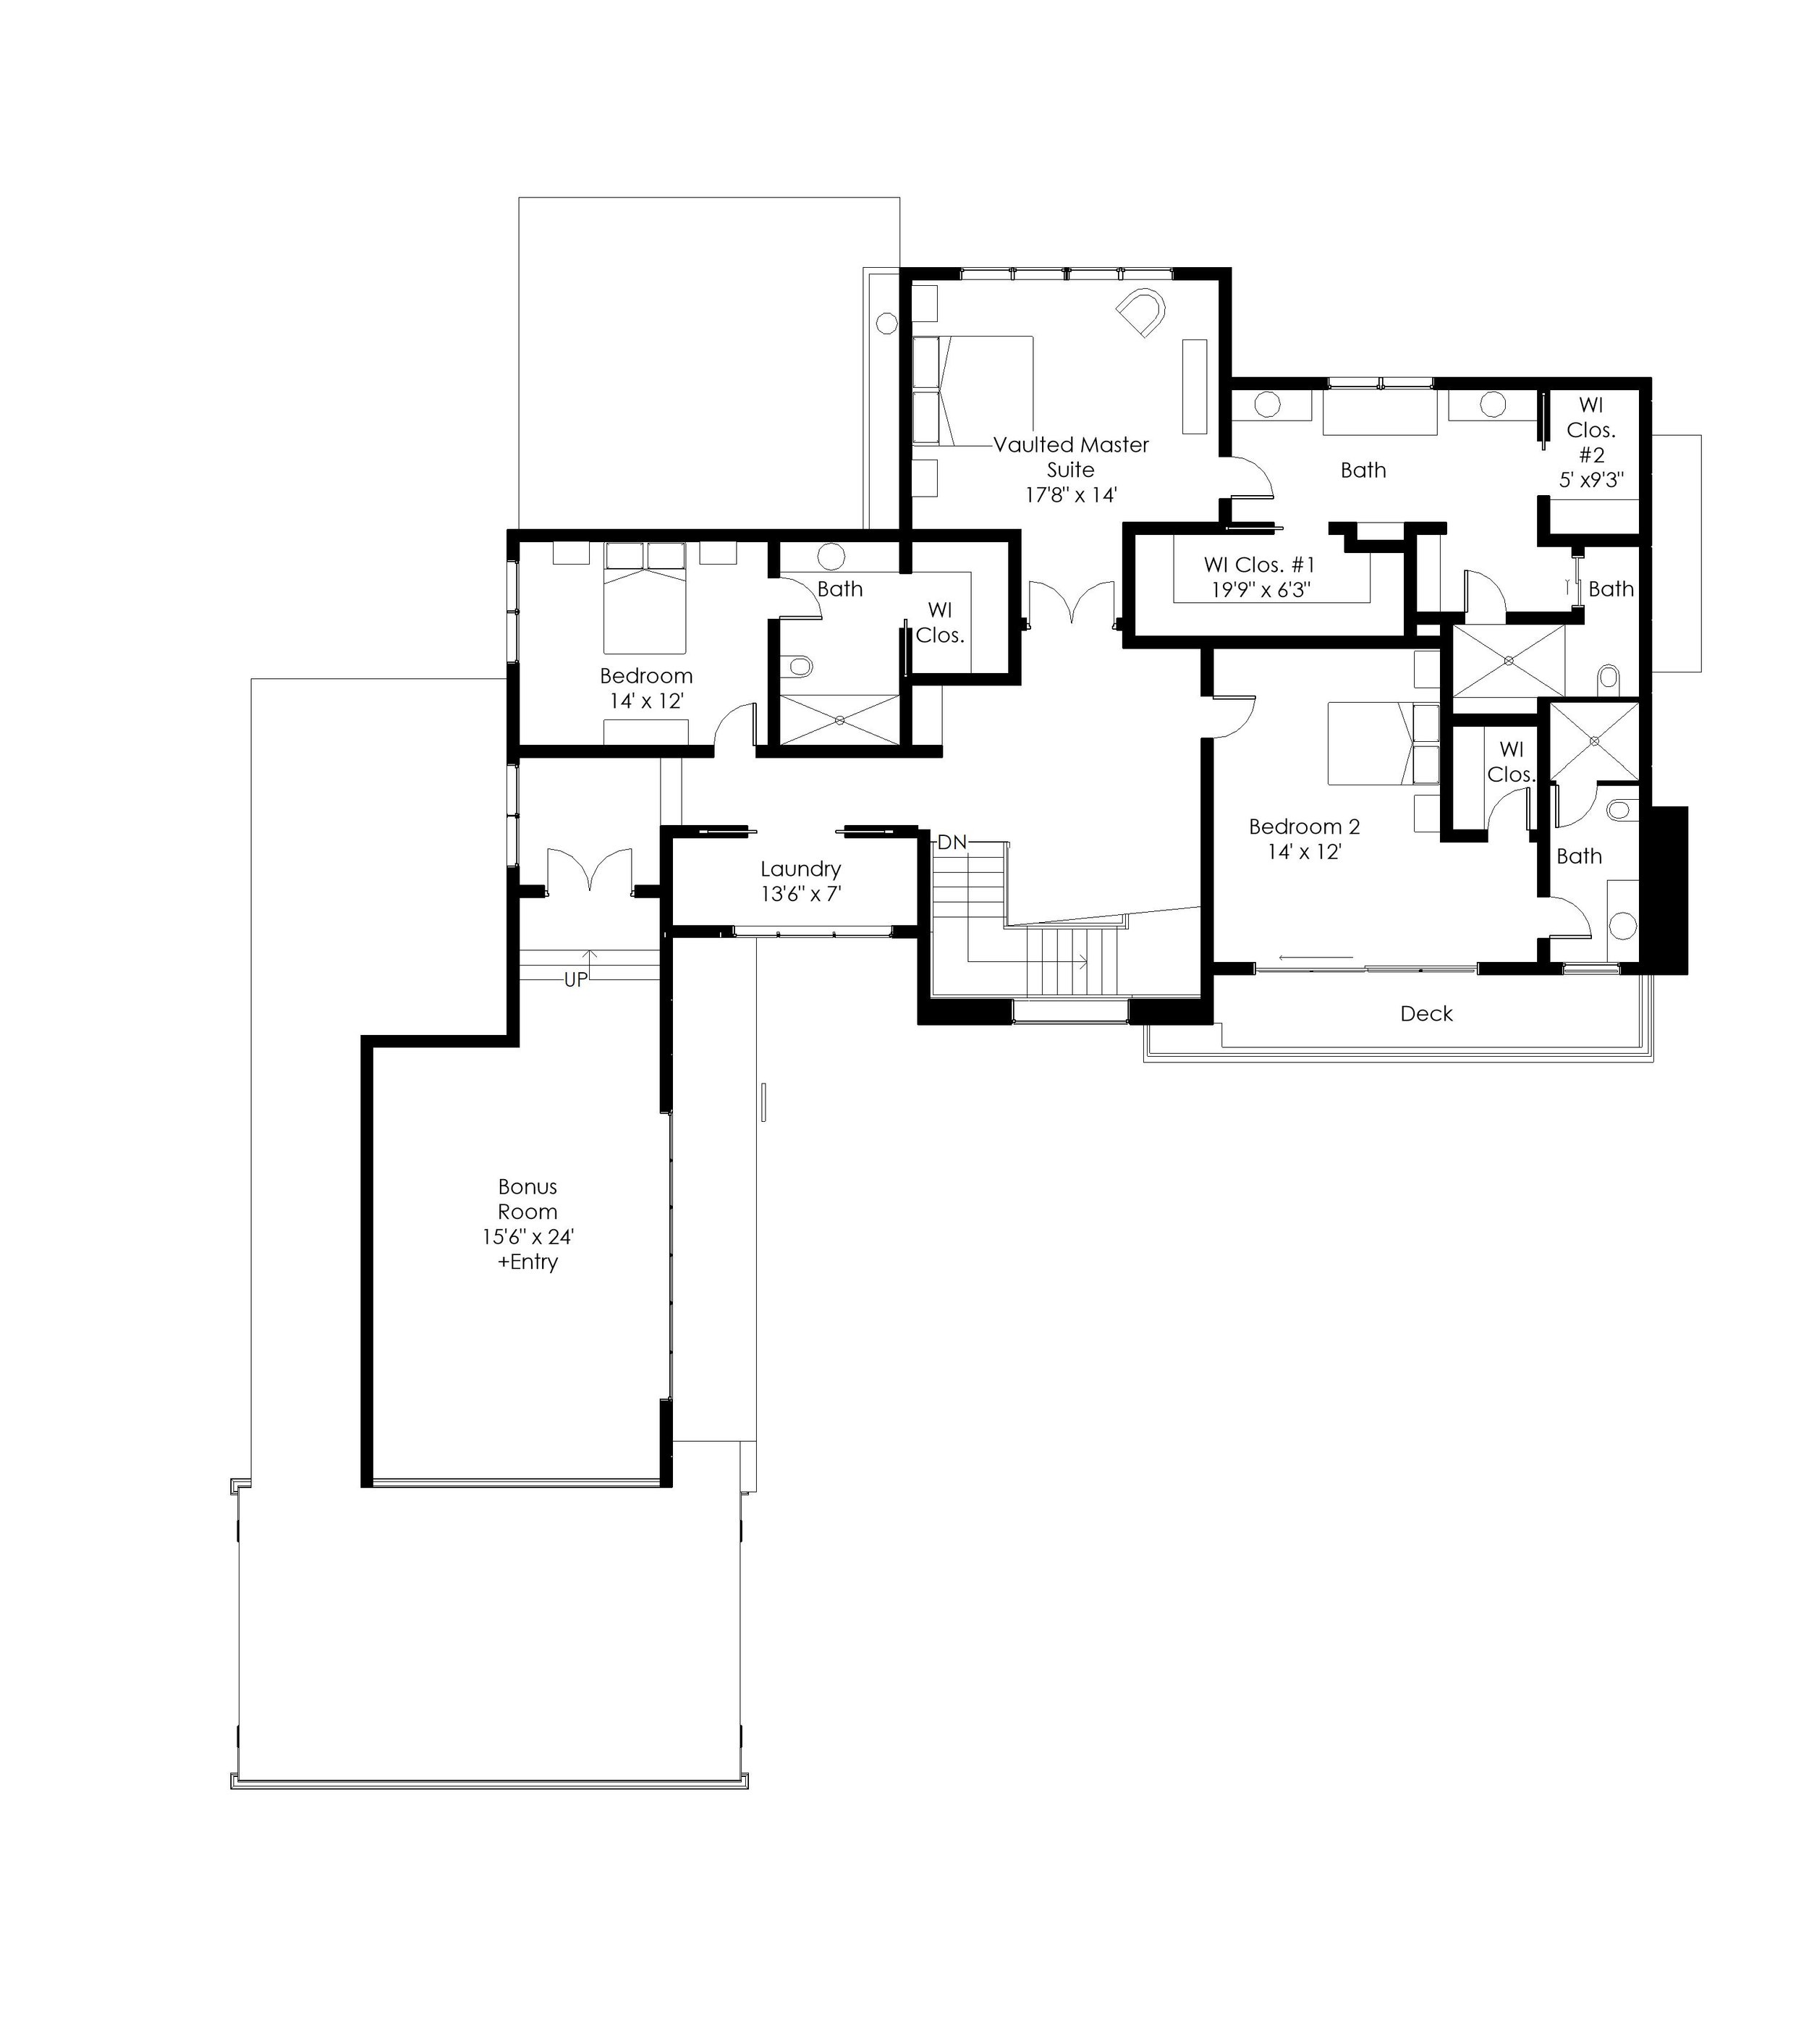 Debbie2 - Floor Plan - Level 2 Copy 1.jpg